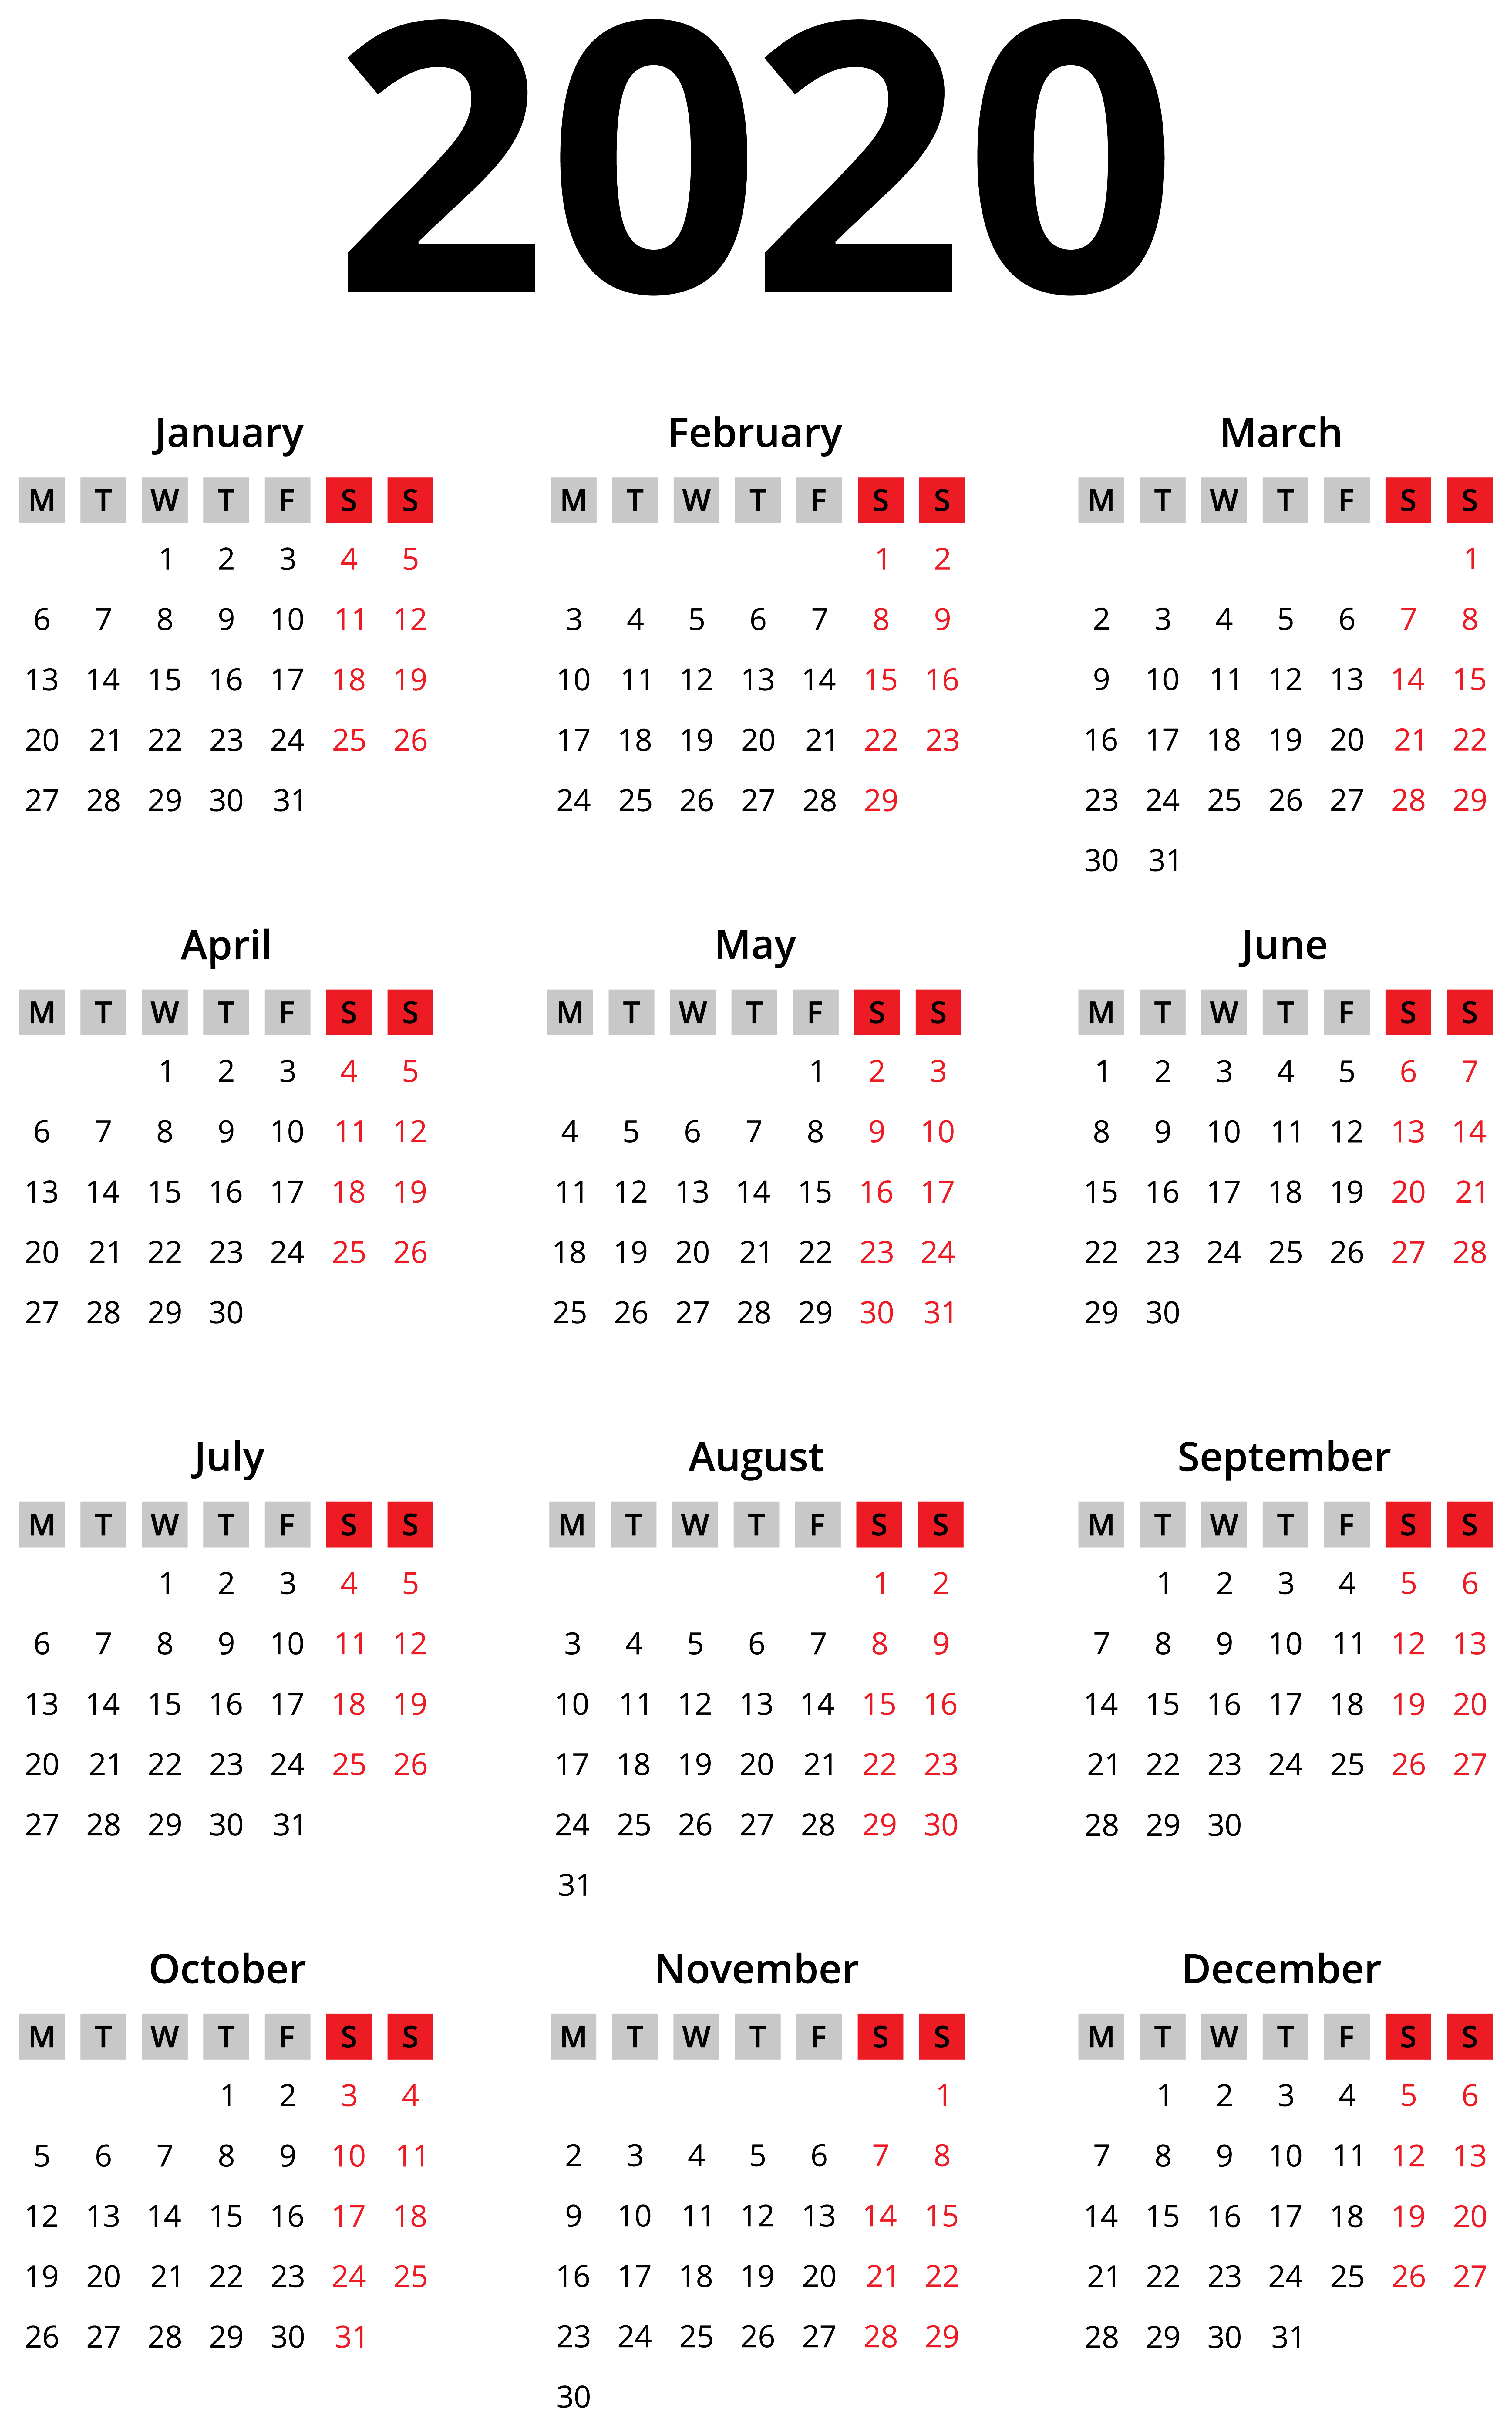 2020 Calendar Wallpapers - Wallpaper Cave